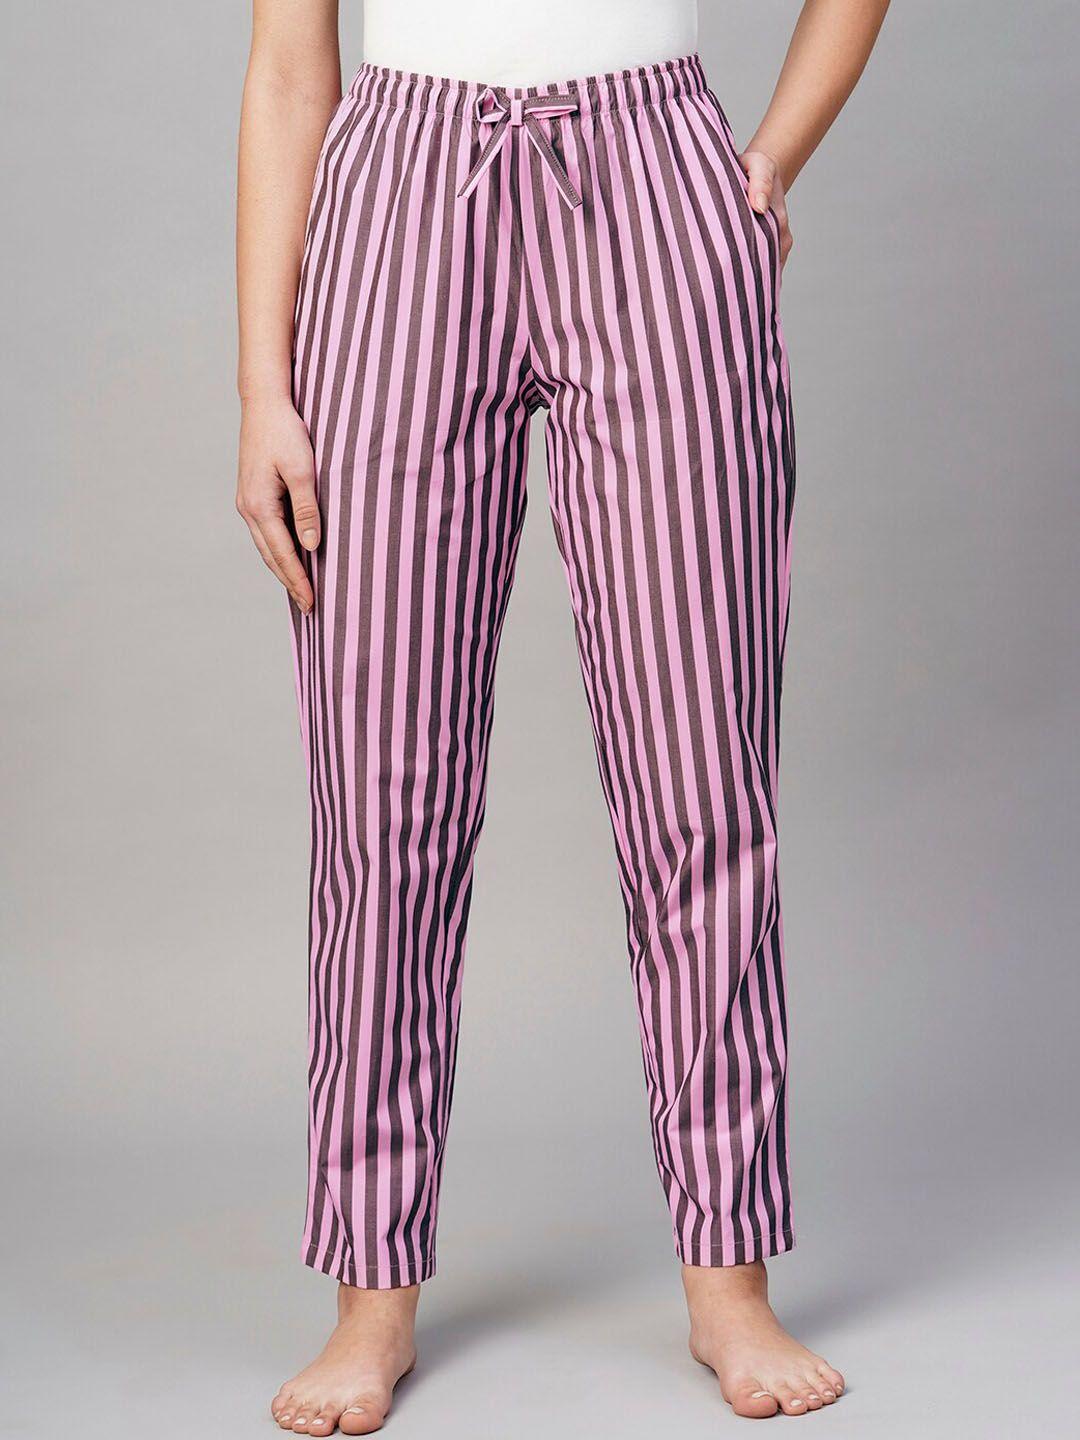 drape in vogue women striped cotton lounge pant